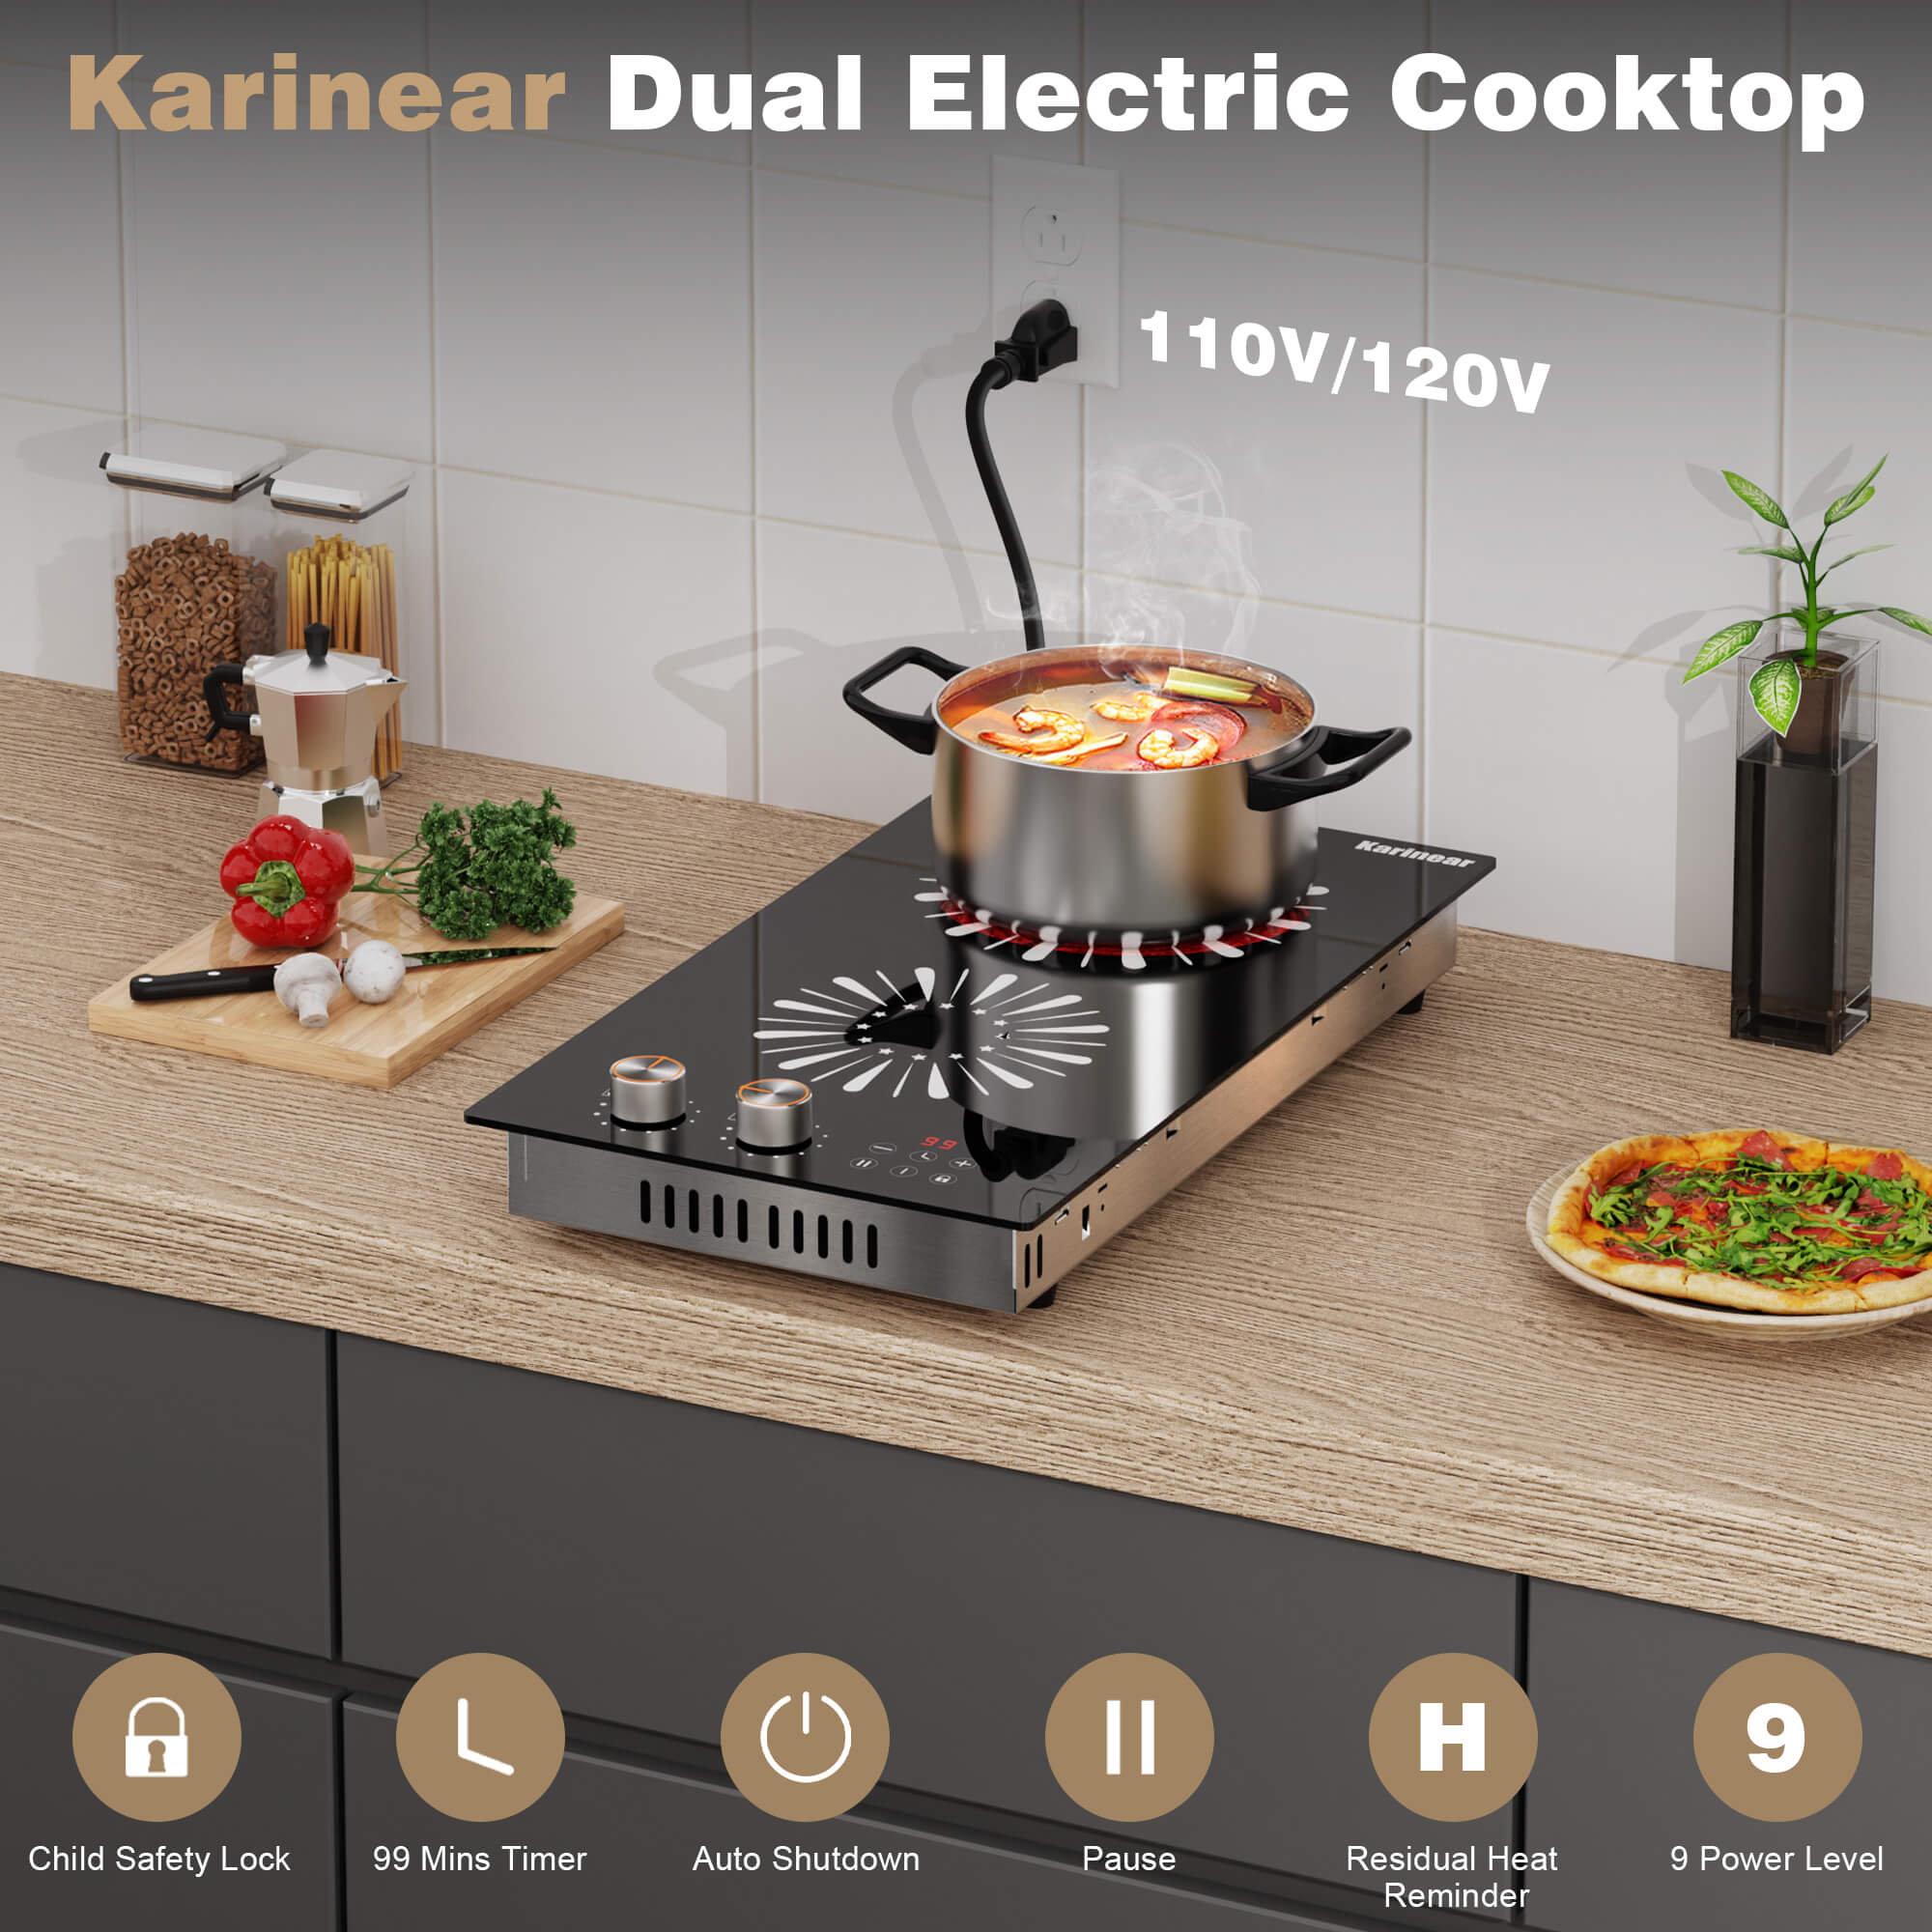 best electric cooktop